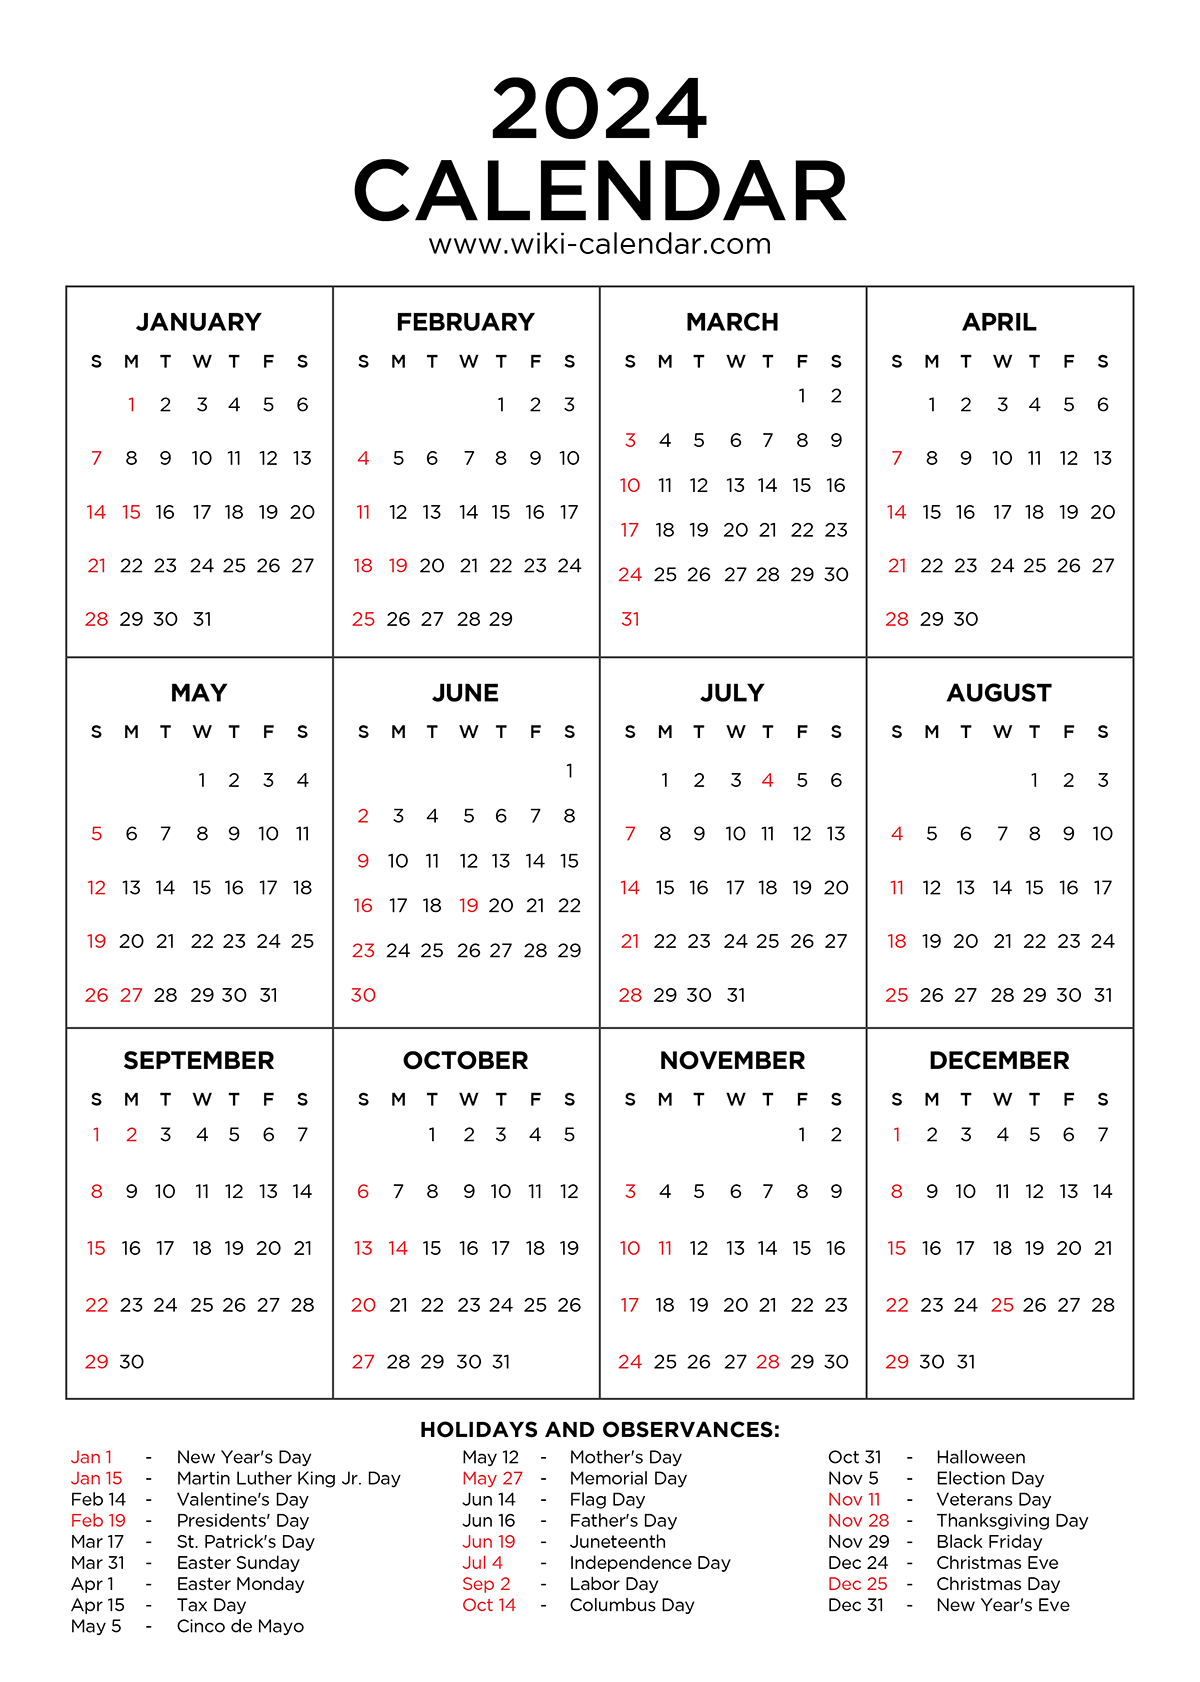 Year 2024 Calendar Printable With Holidays - Wiki Calendar | Printable Calendar 2024 With Holidays Free Download